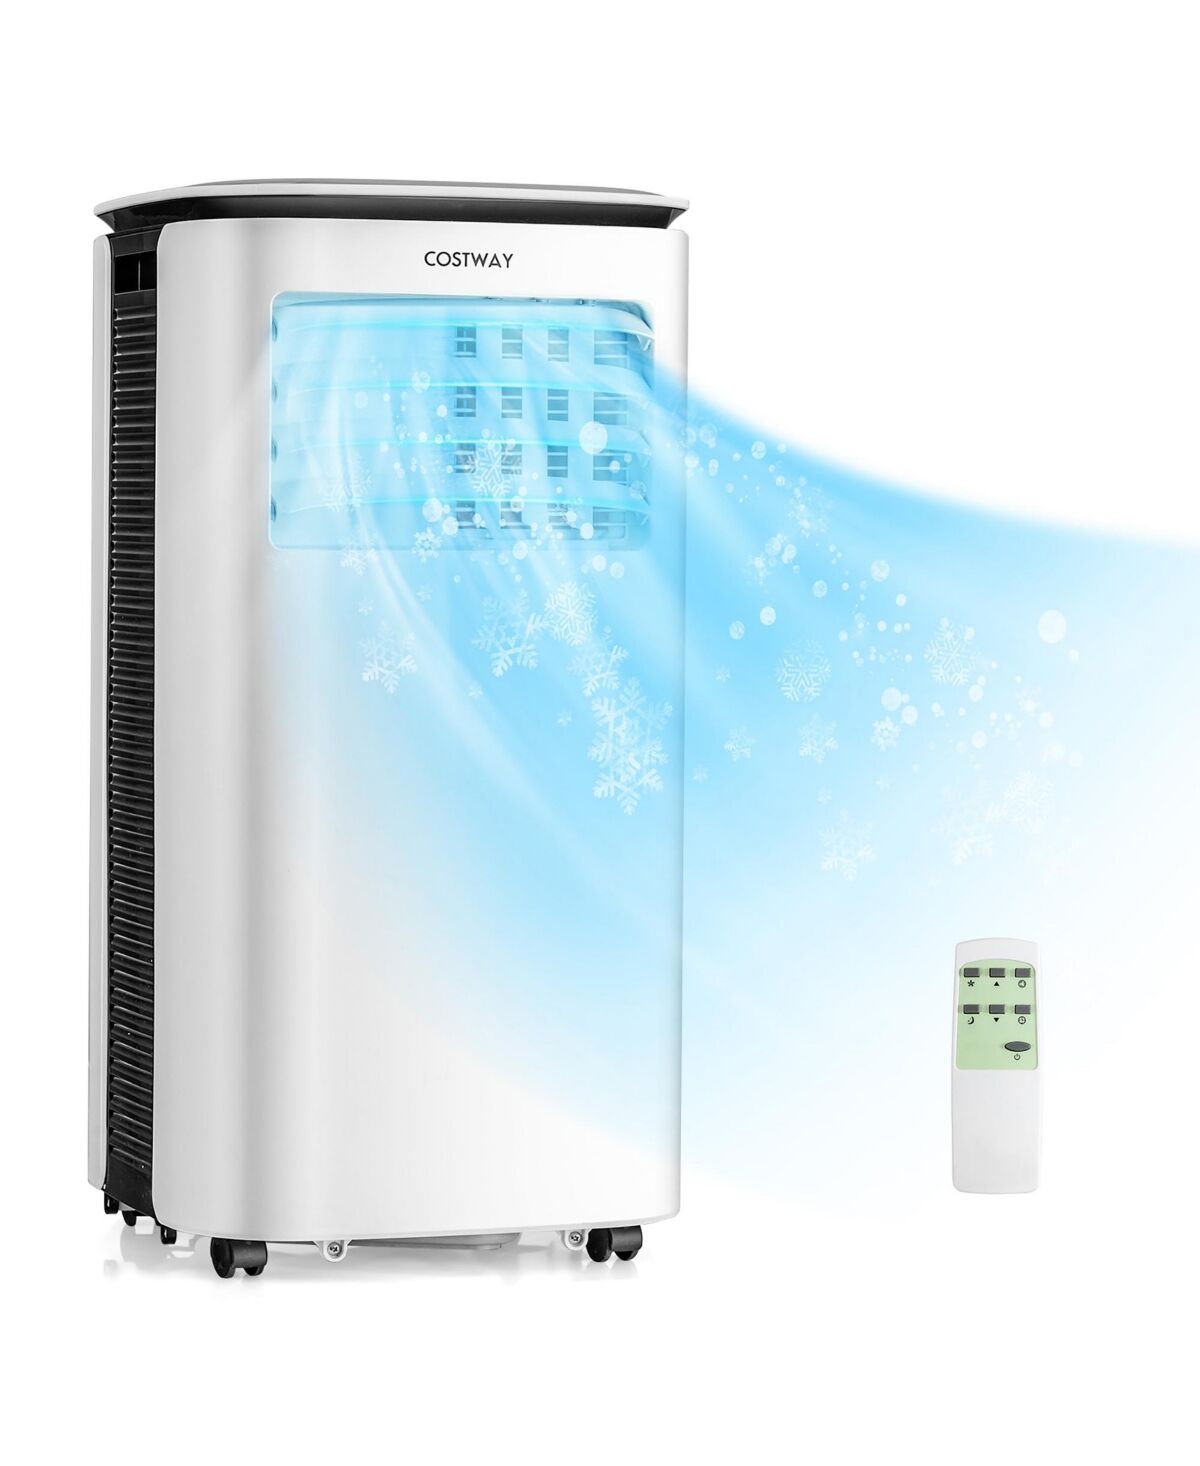 Costway 9000 Btu Air Cooler 3 in 1 Portable Air Conditioner w/Fan & Dehumidifier - White